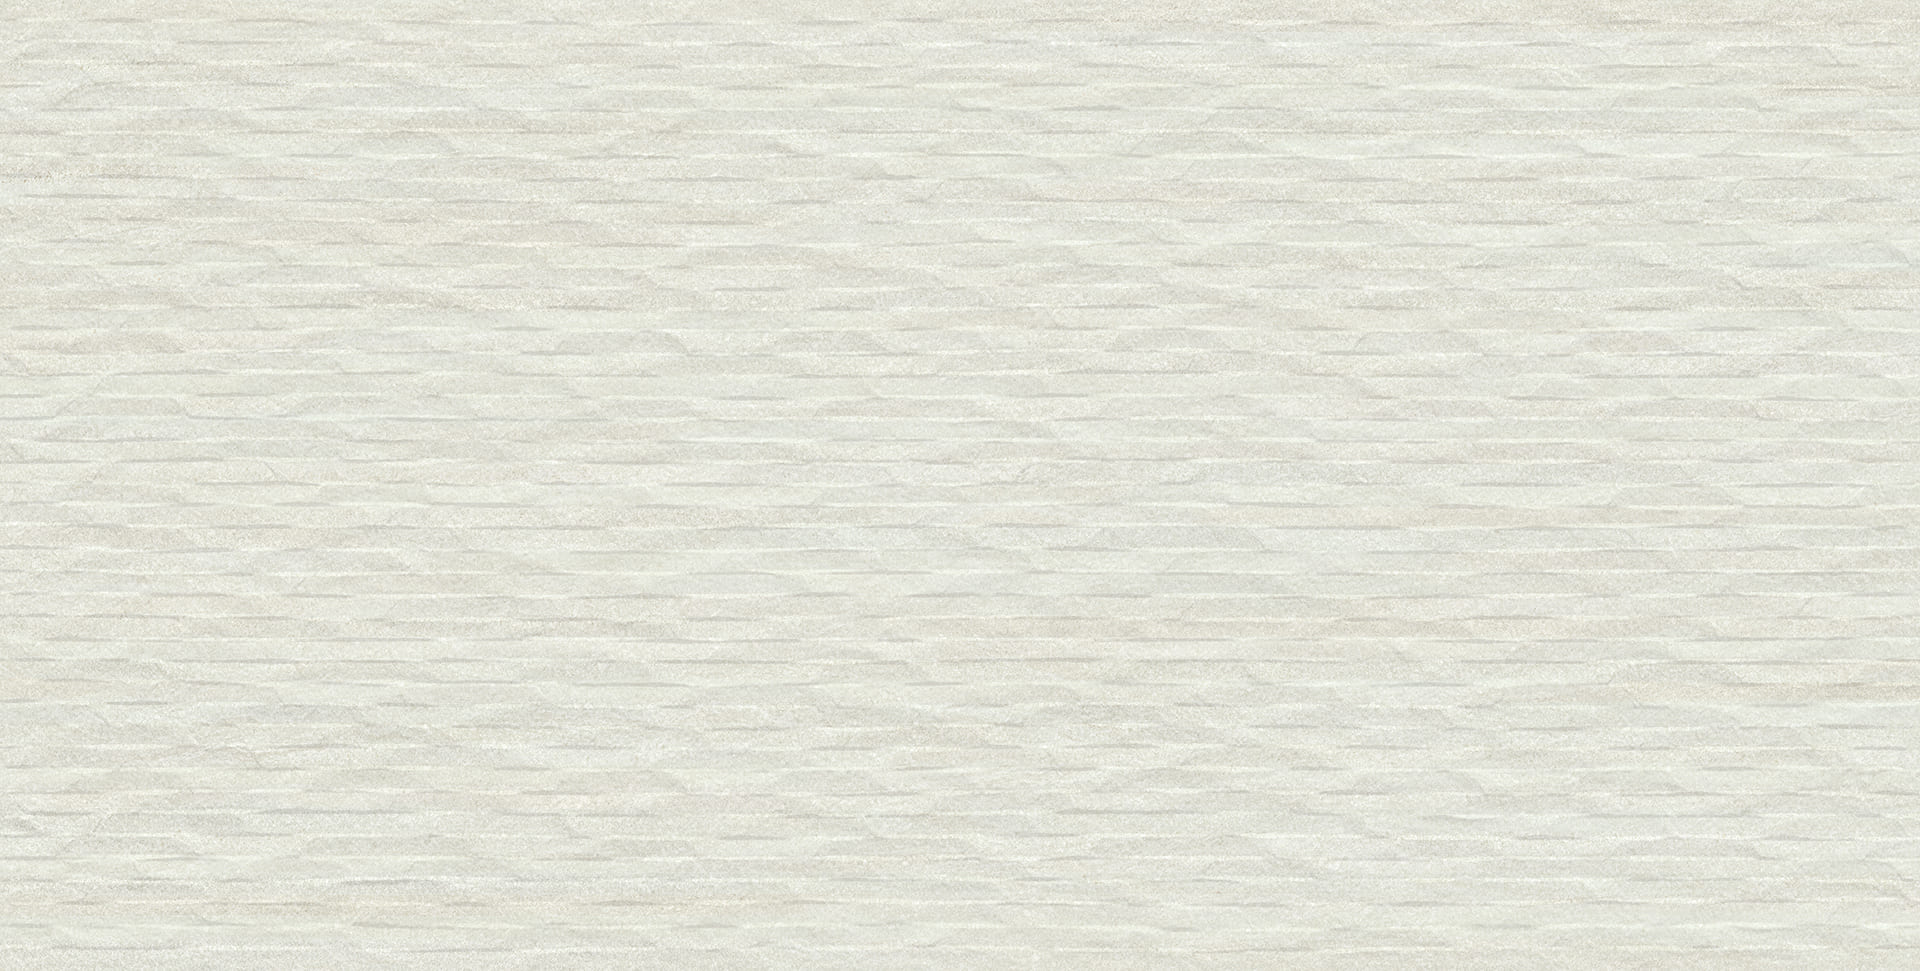 Elegance Pro: Mural White Wall Tile (24"x48"x9.5-mm | matte)